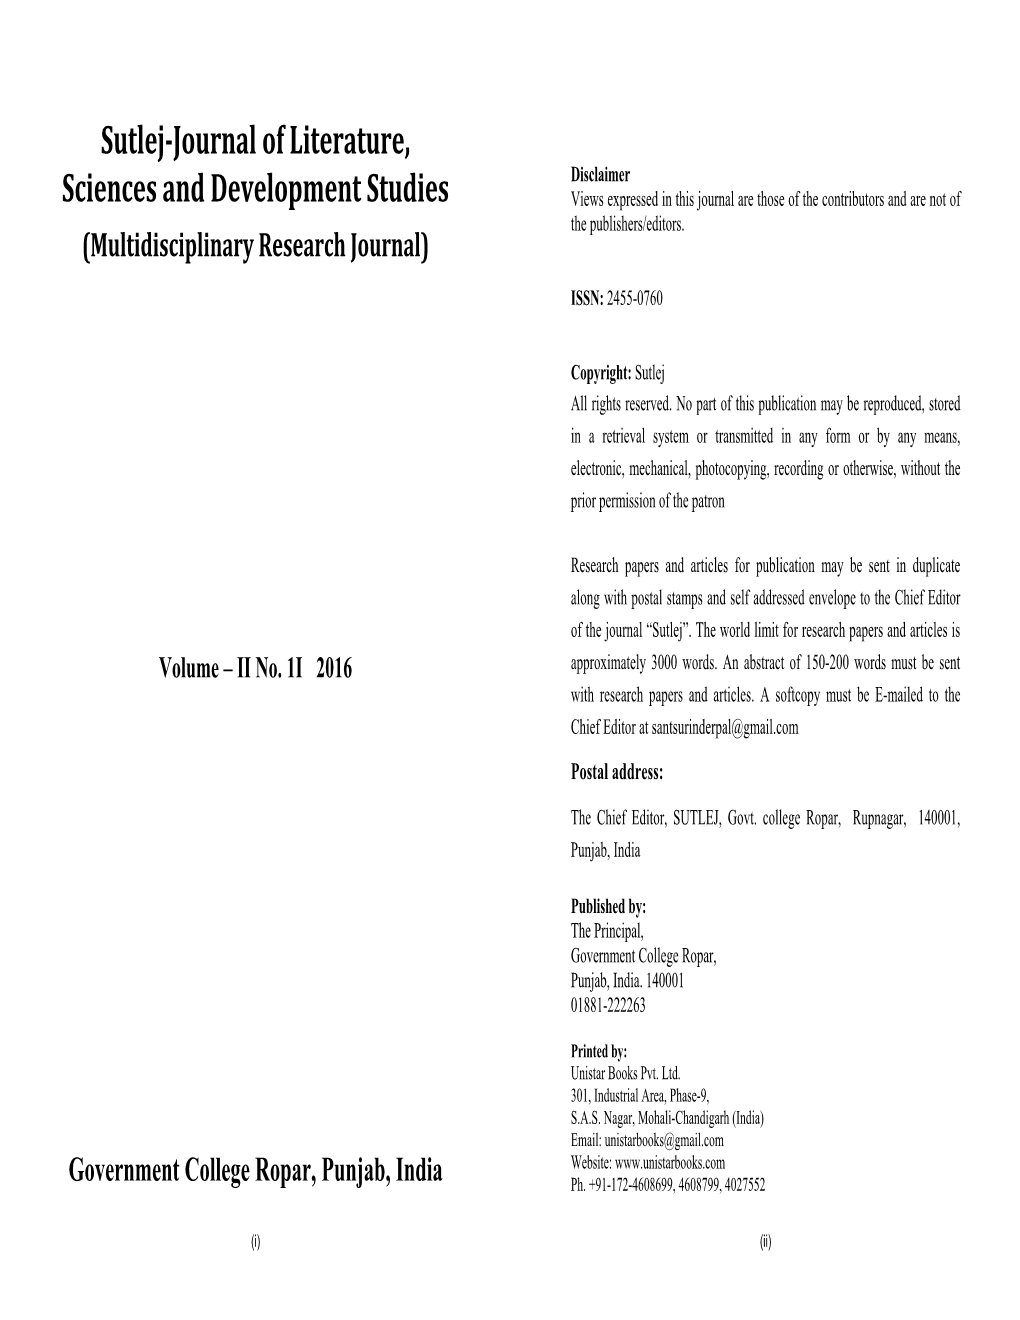 Sutlej-Journal of Literature, Sciences and Development Studies